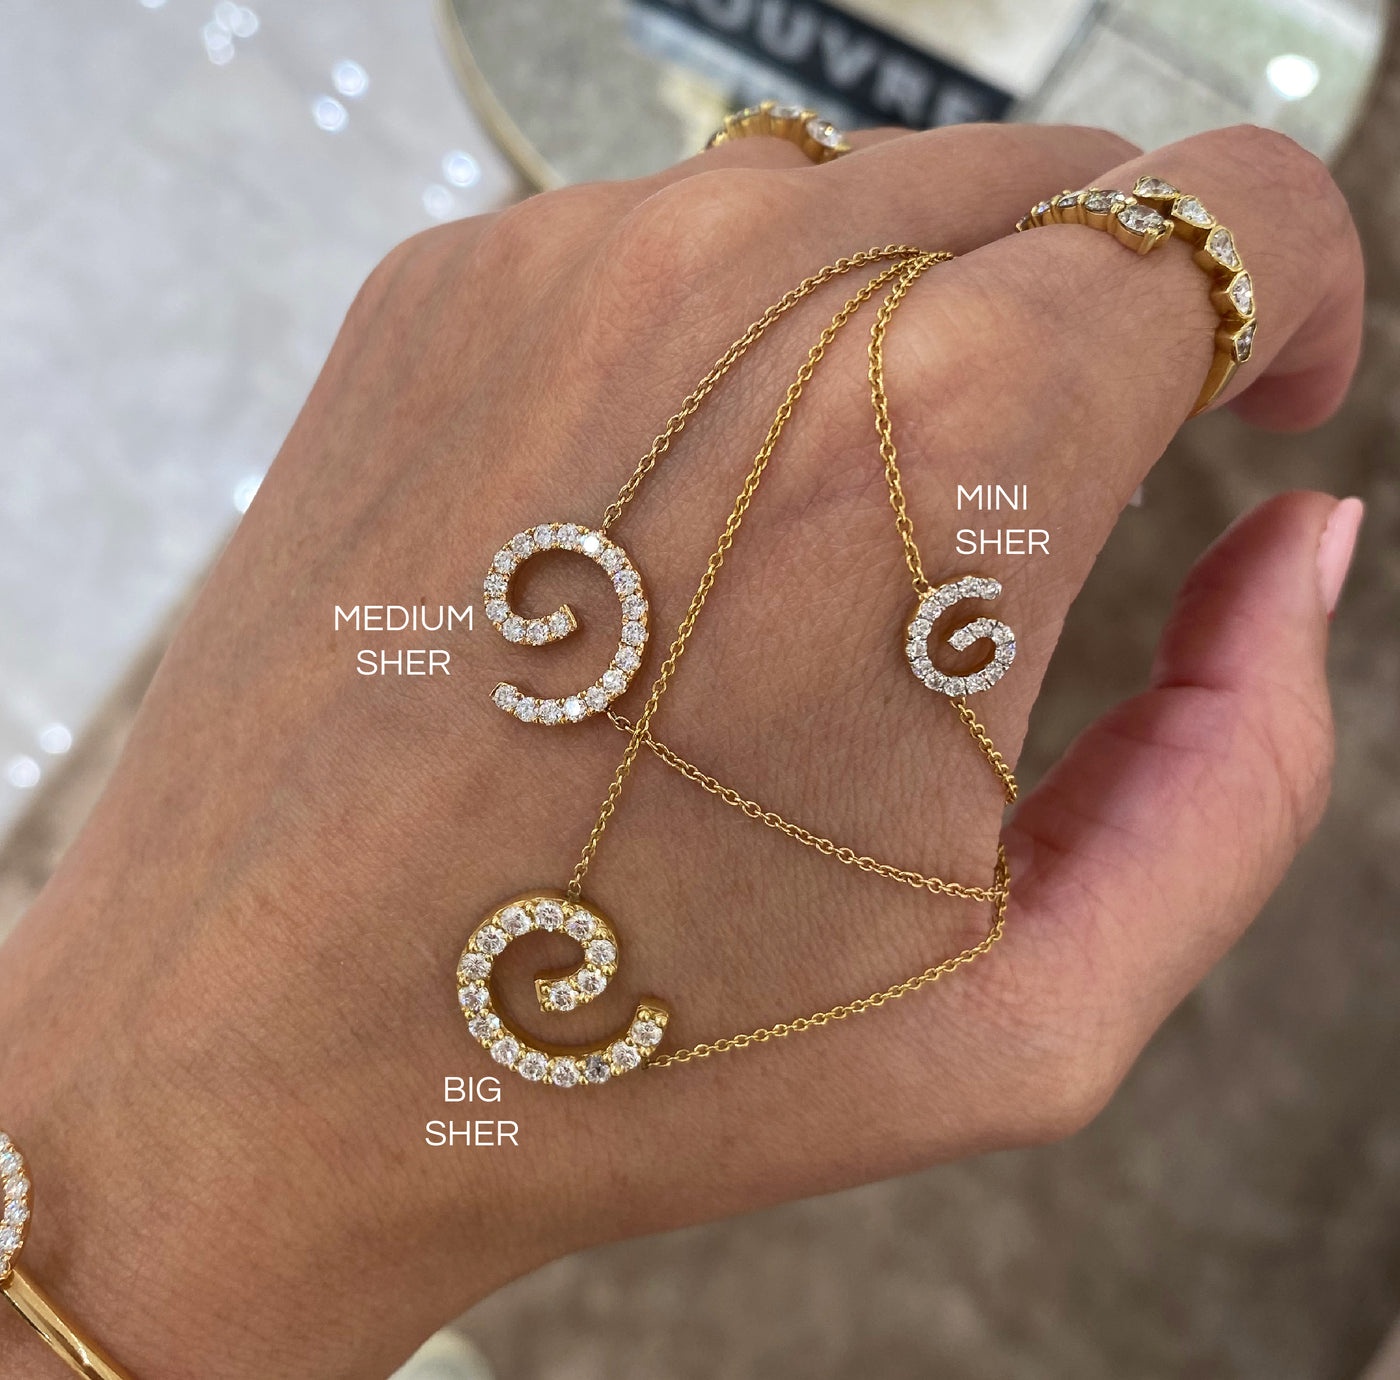 Big SHER Spiral Necklace